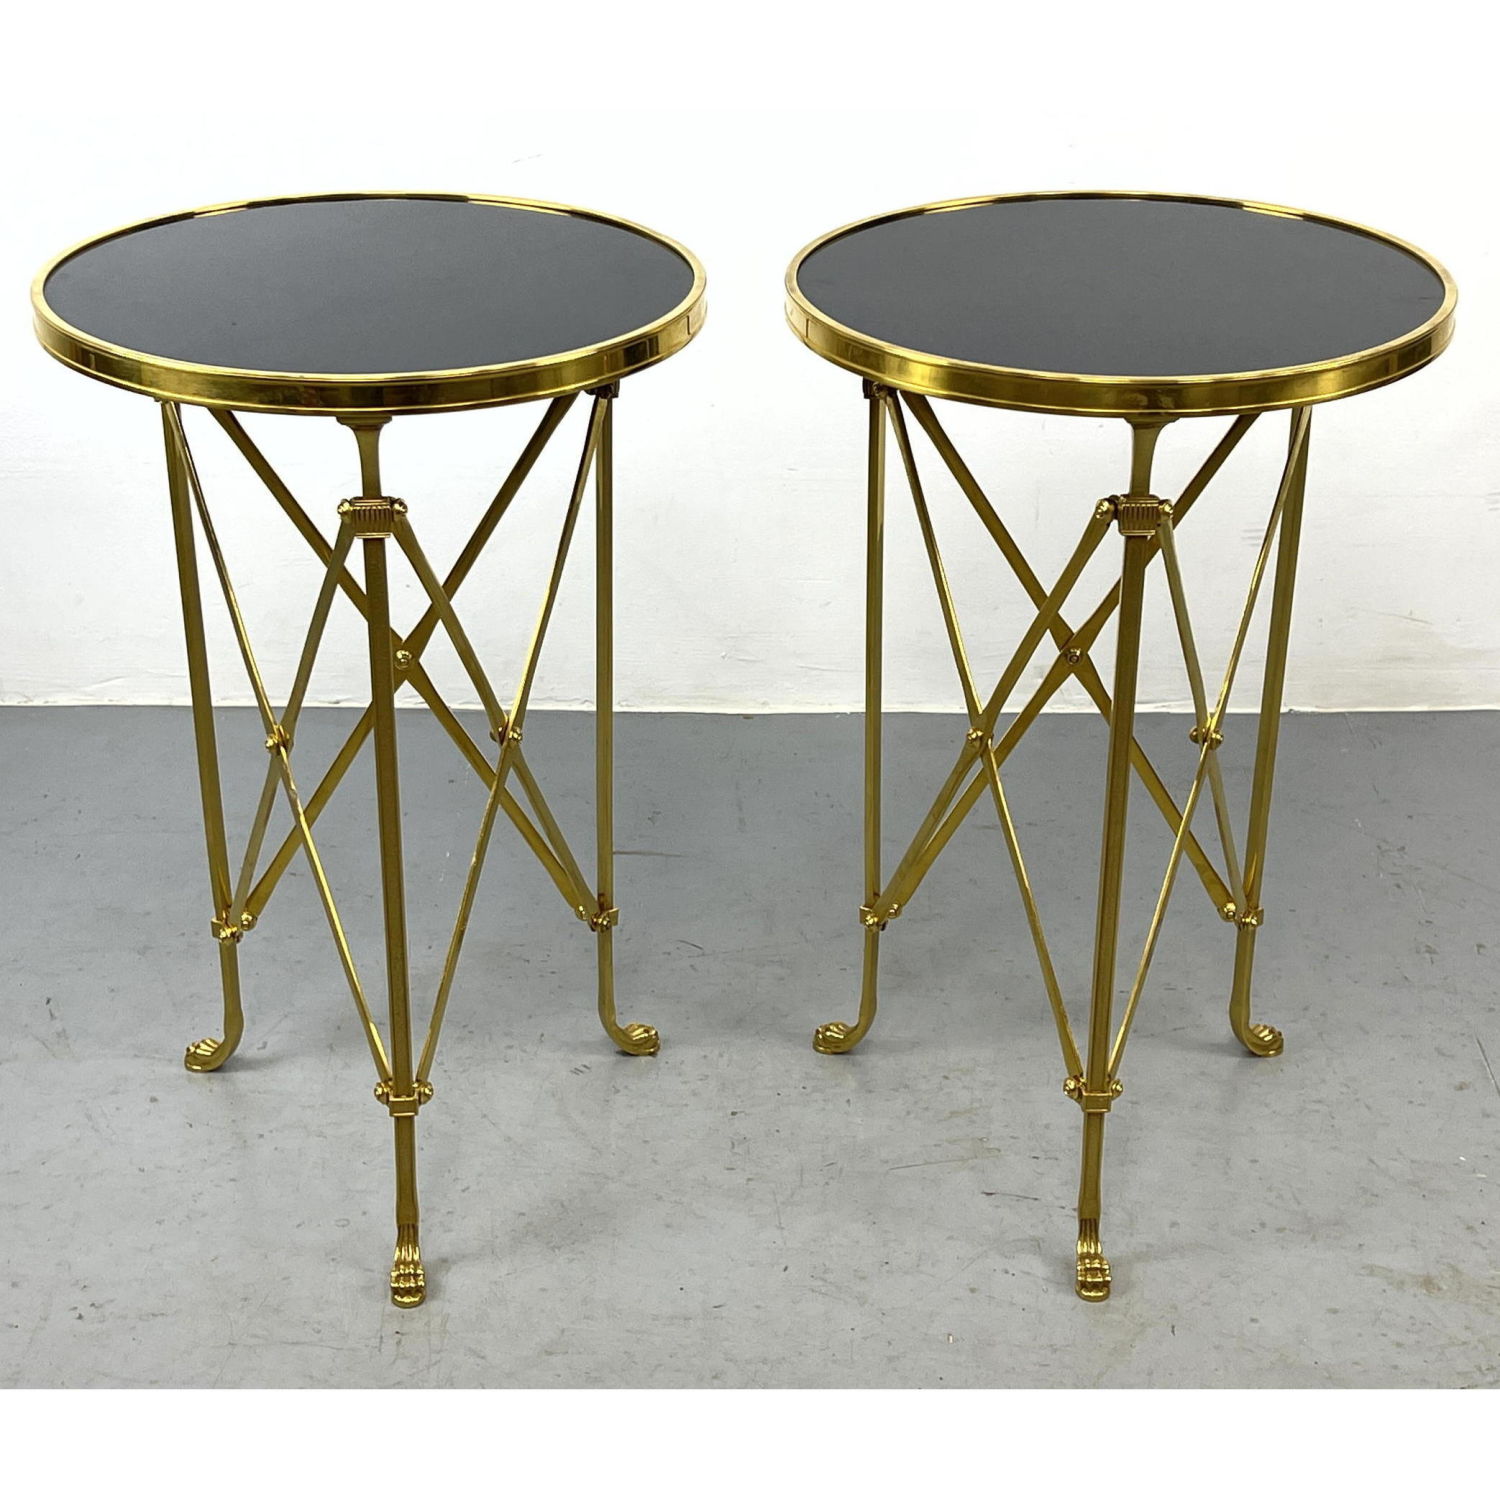 Pr Brass and Granite Tabouret Tables.